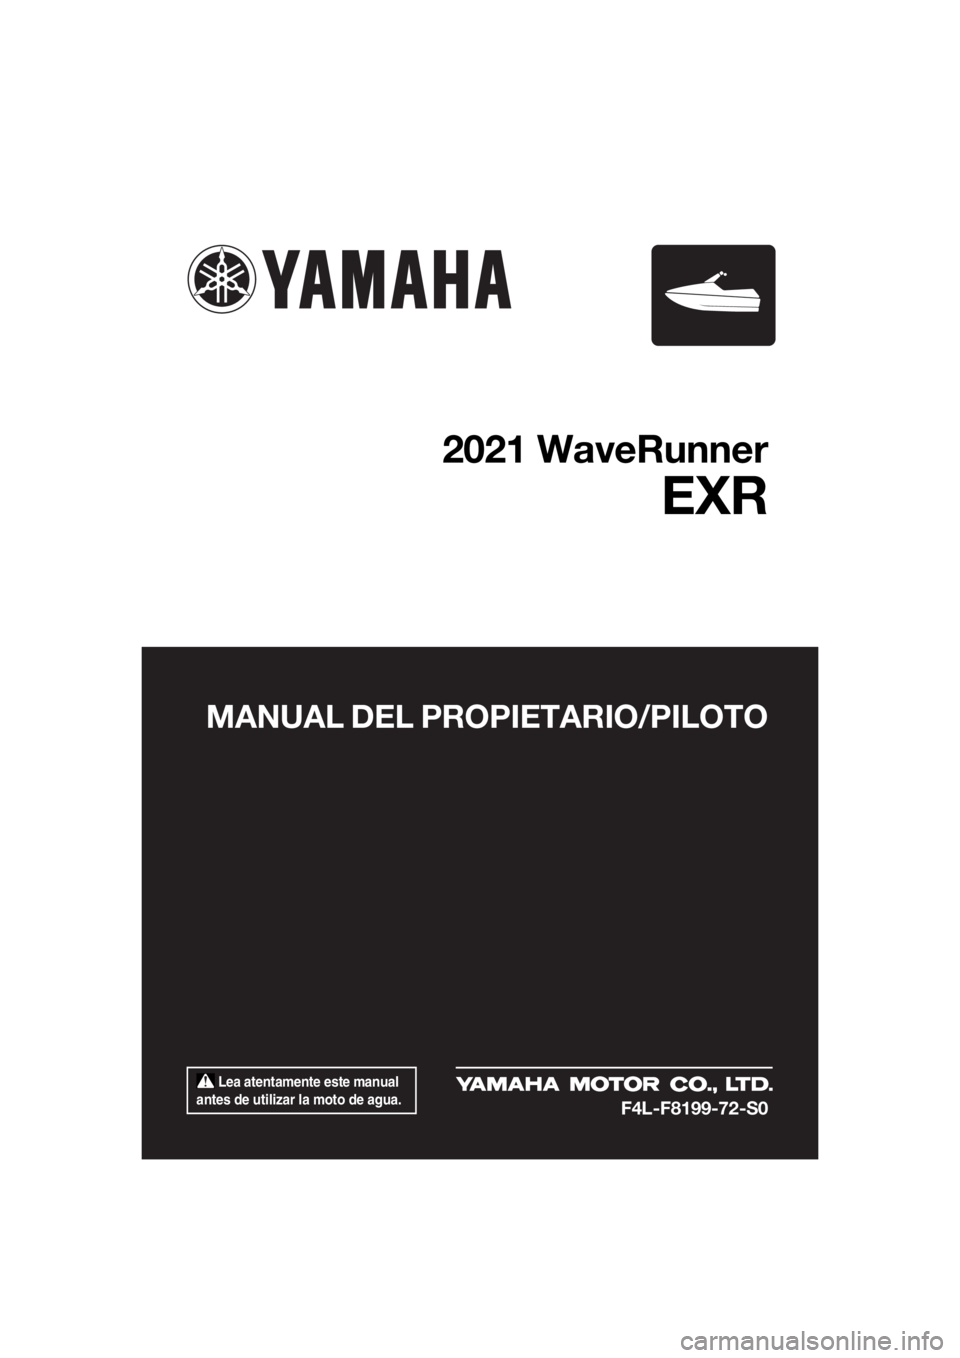 YAMAHA EXR 2021  Manuale de Empleo (in Spanish)  Lea atentamente este manual 
antes de utilizar la moto de agua.
MANUAL DEL PROPIETARIO/PILOTO
2021 WaveRunner
EXR
F4L-F8199-72-S0
UF4L72S0.book  Page 1  Friday, June 19, 2020  9:17 AM 